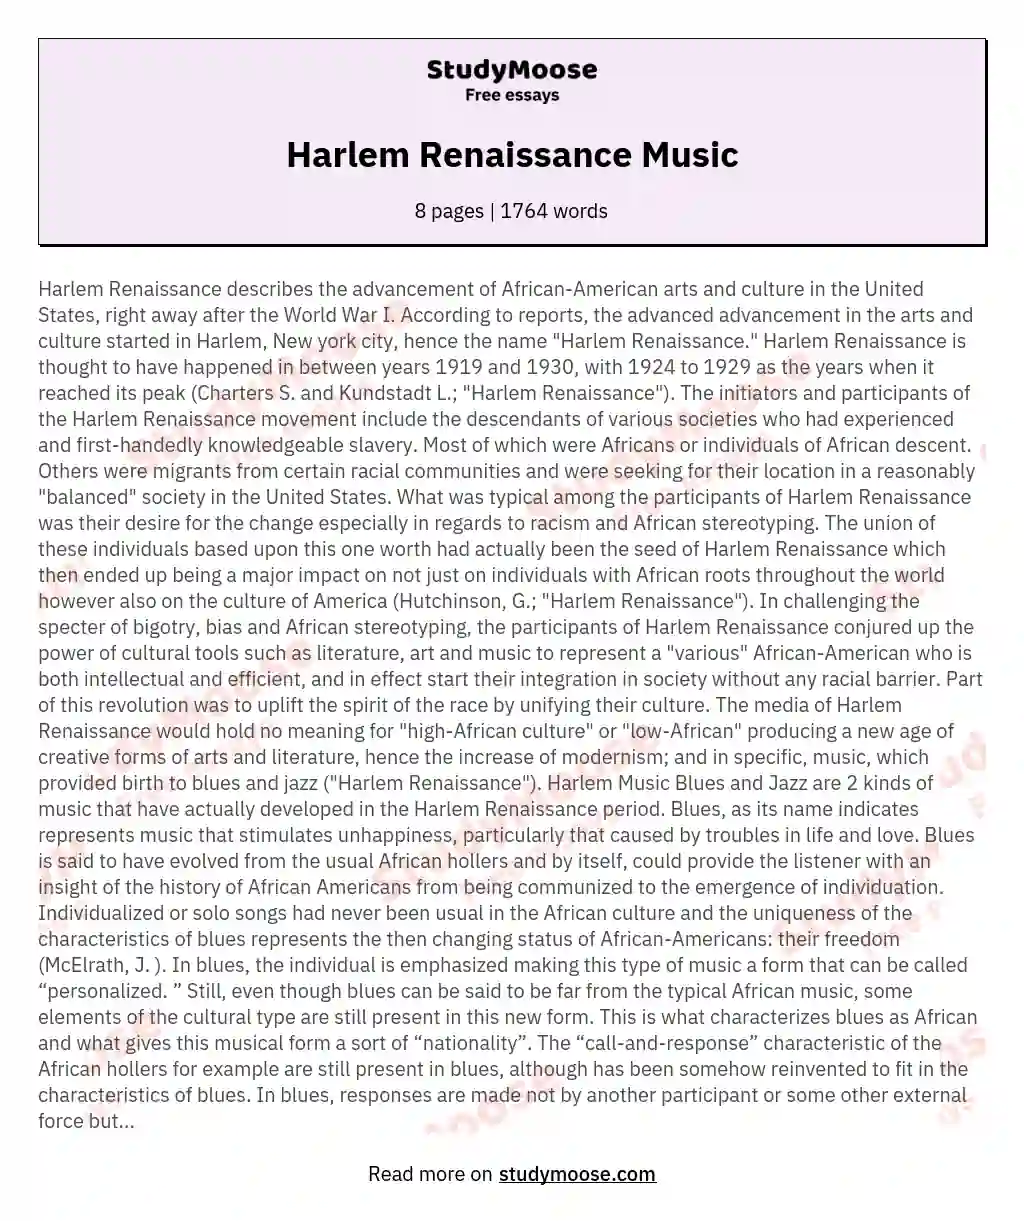 Harlem Renaissance Music essay